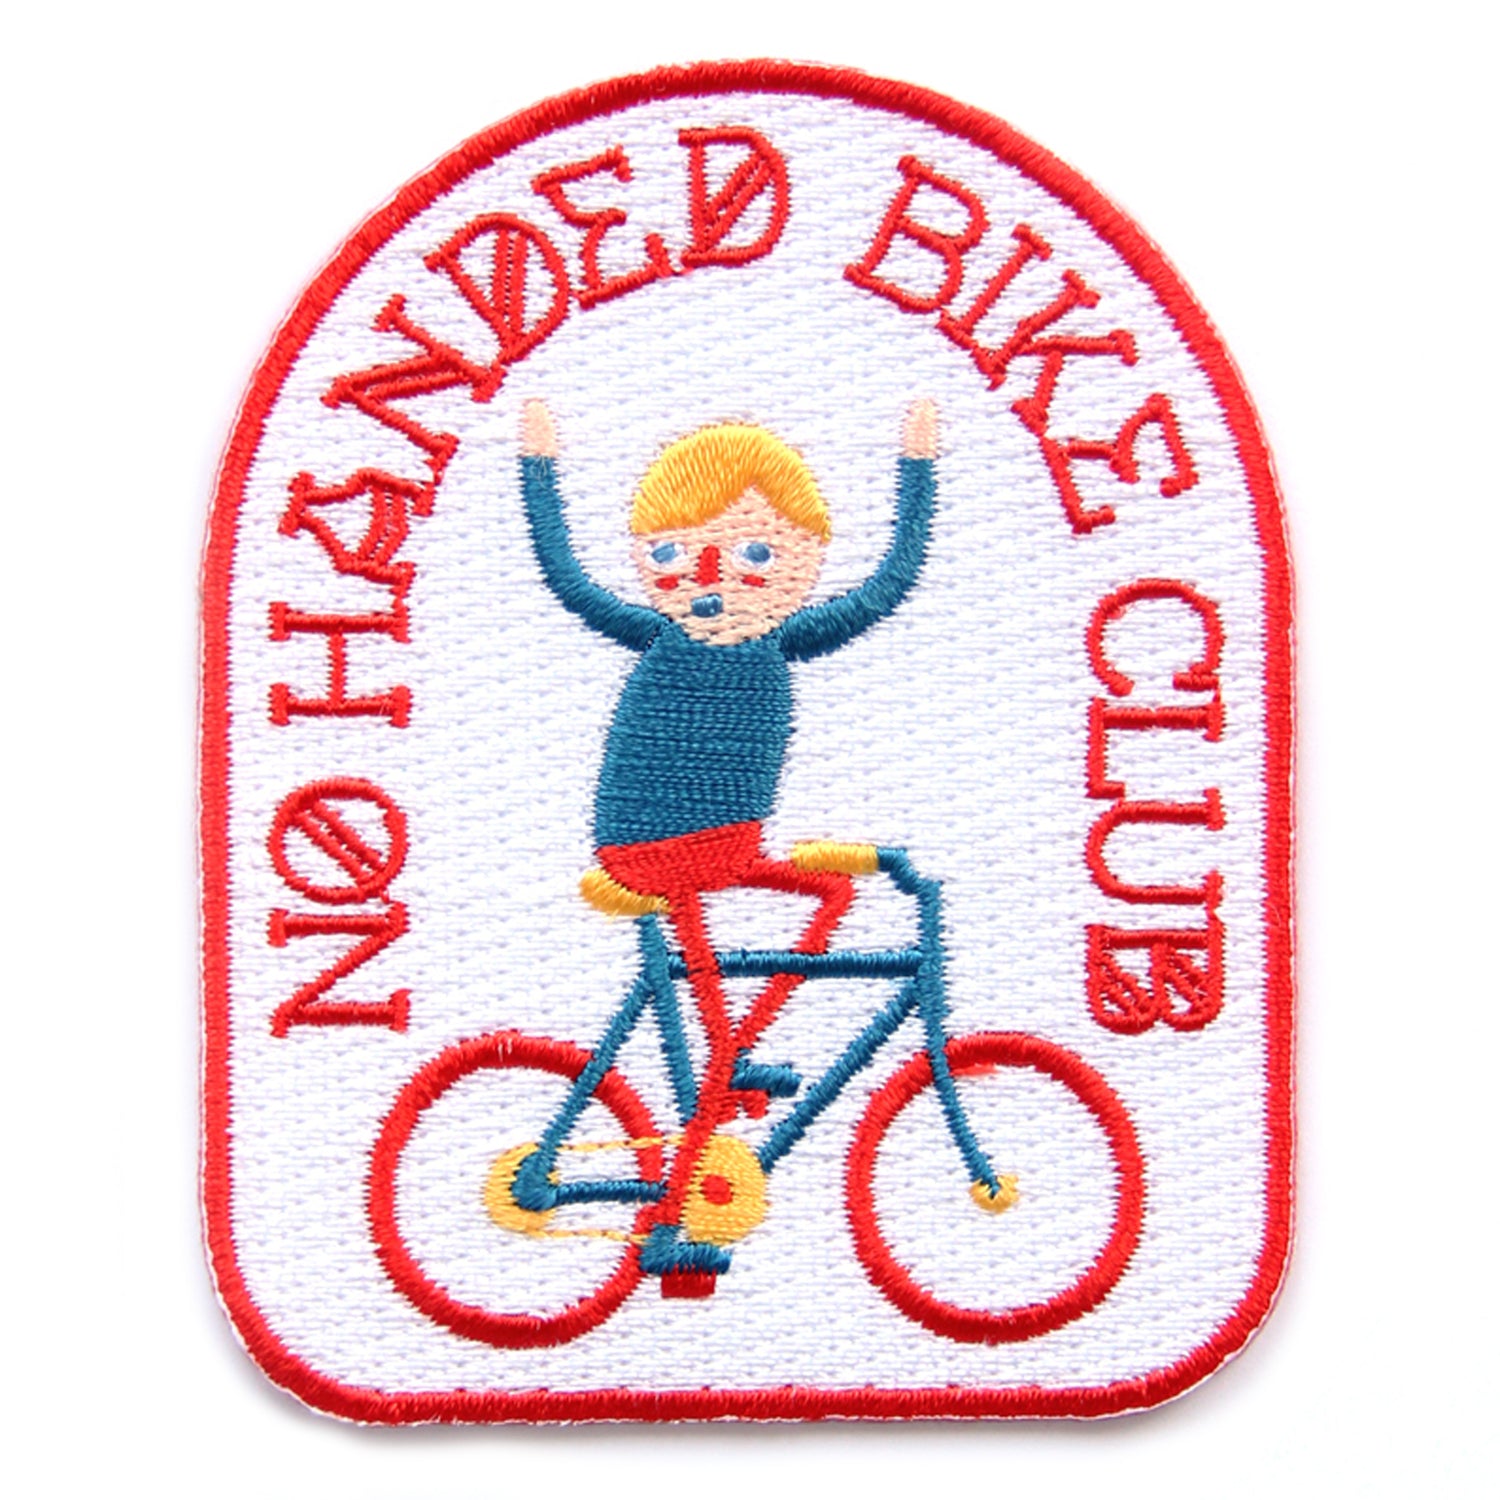 No Handed Bike Club Patch